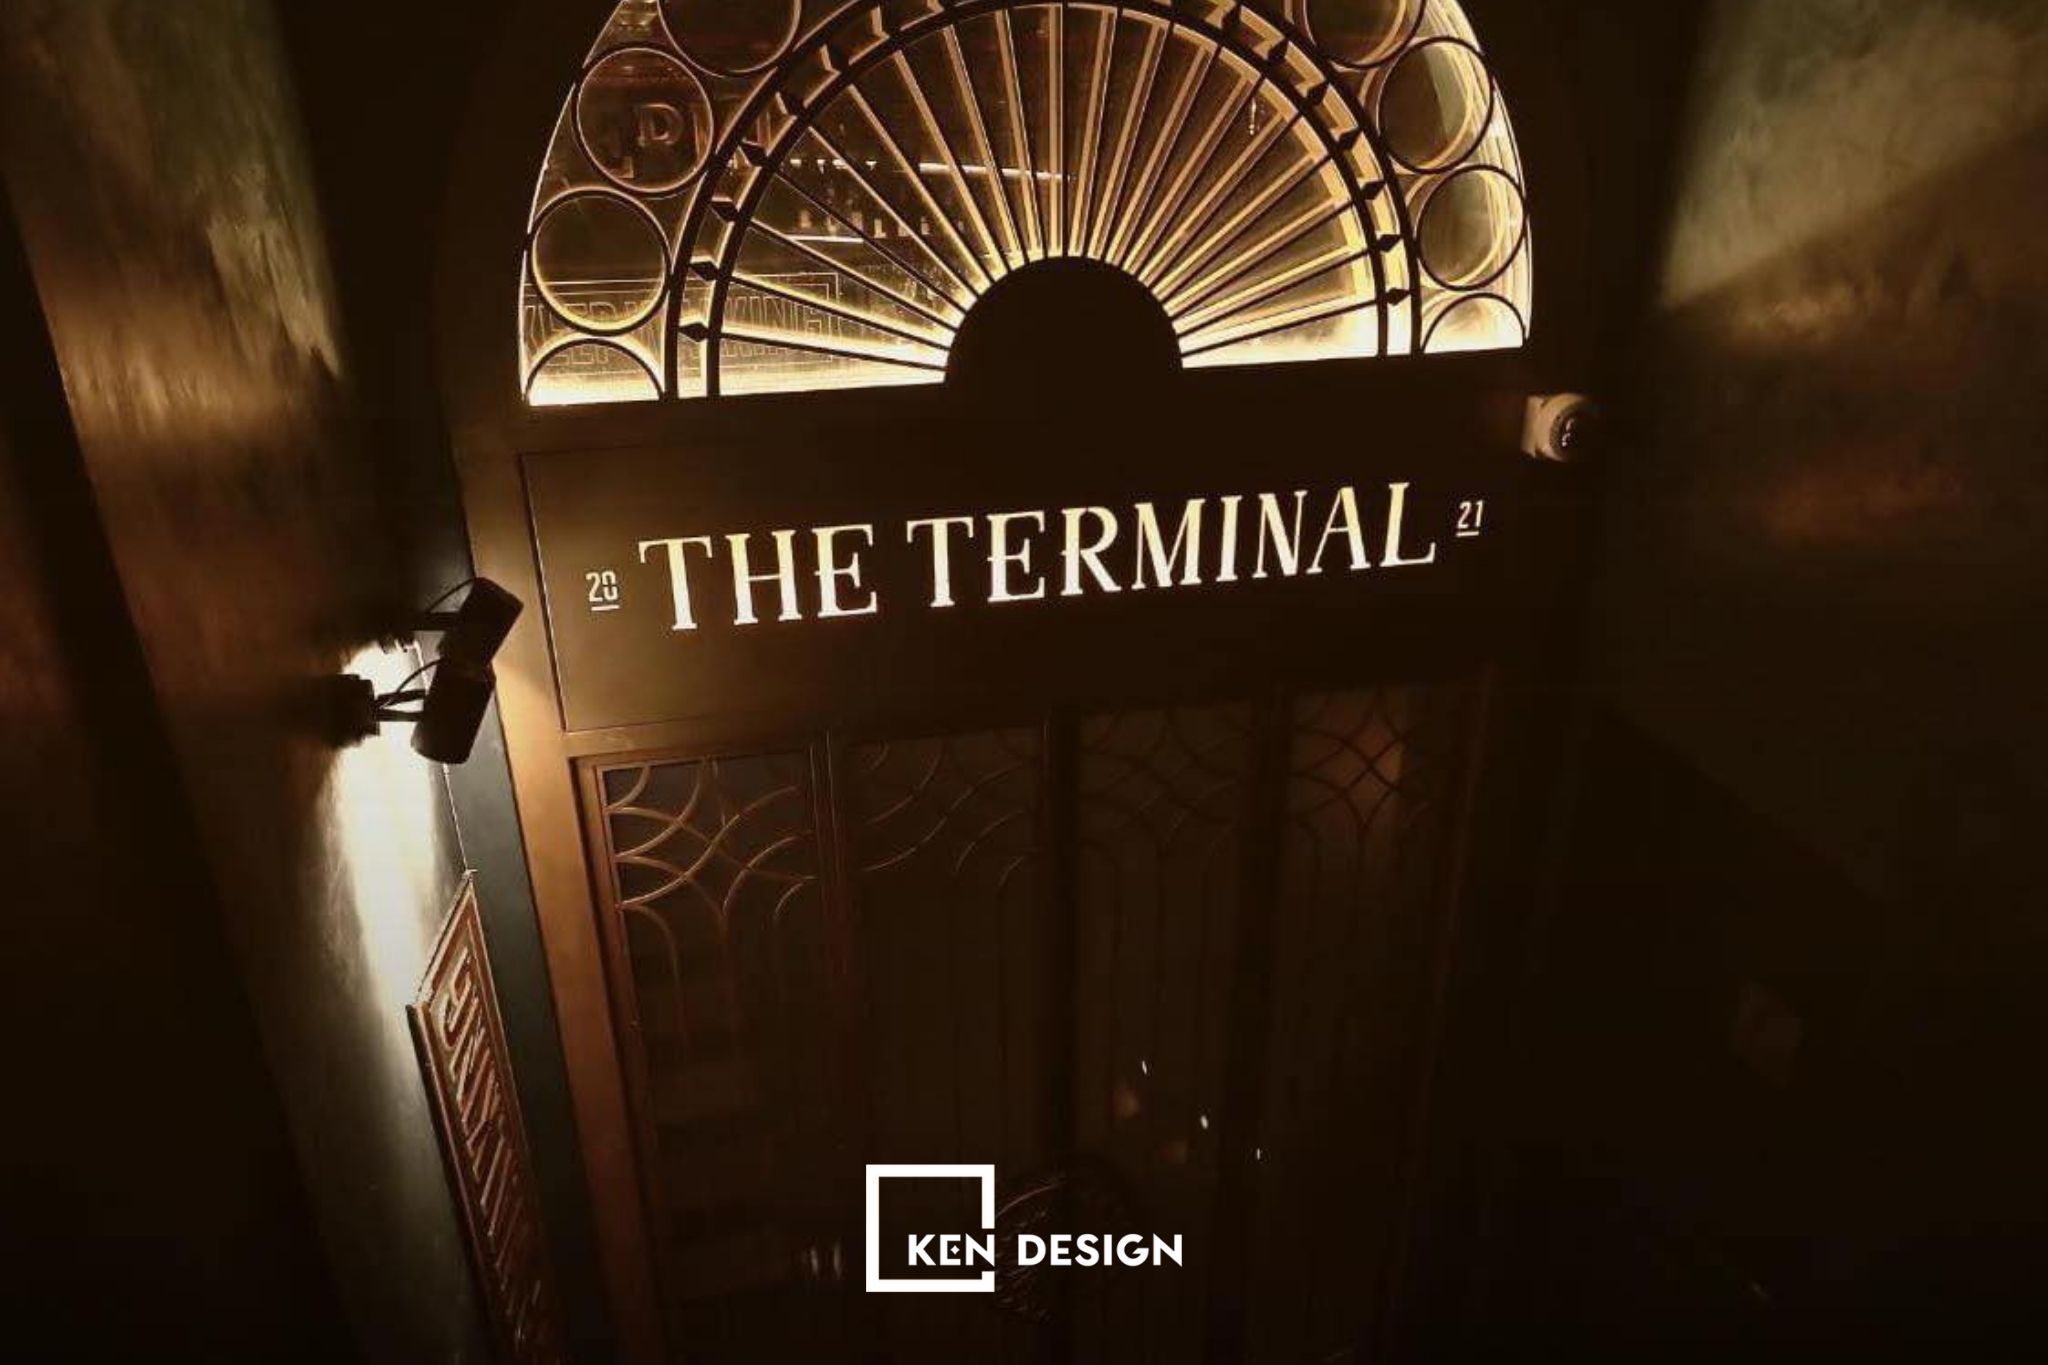 Thiết kế The Terminal 